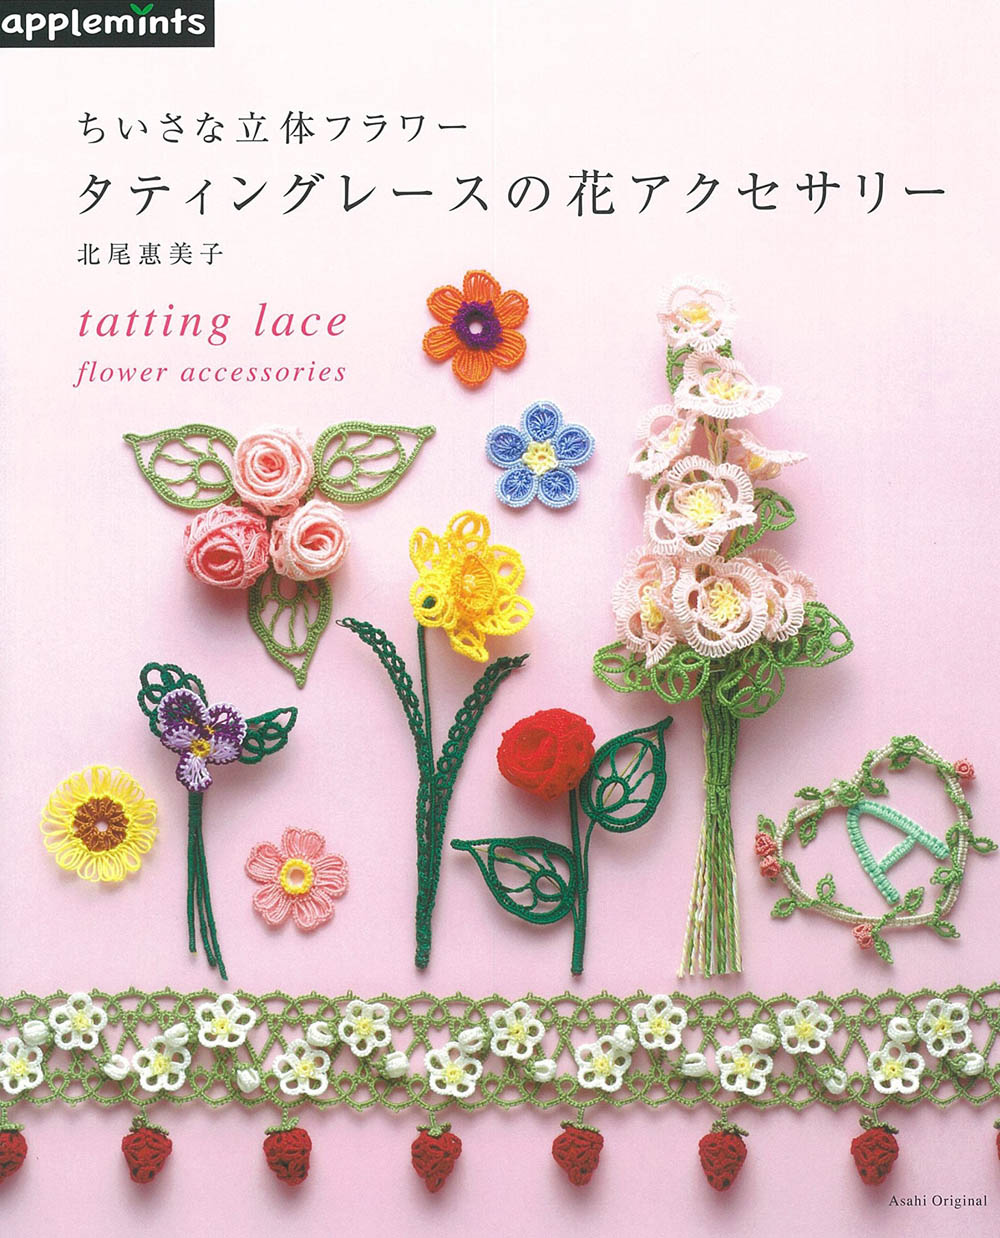 Small flower accessories of Tatting